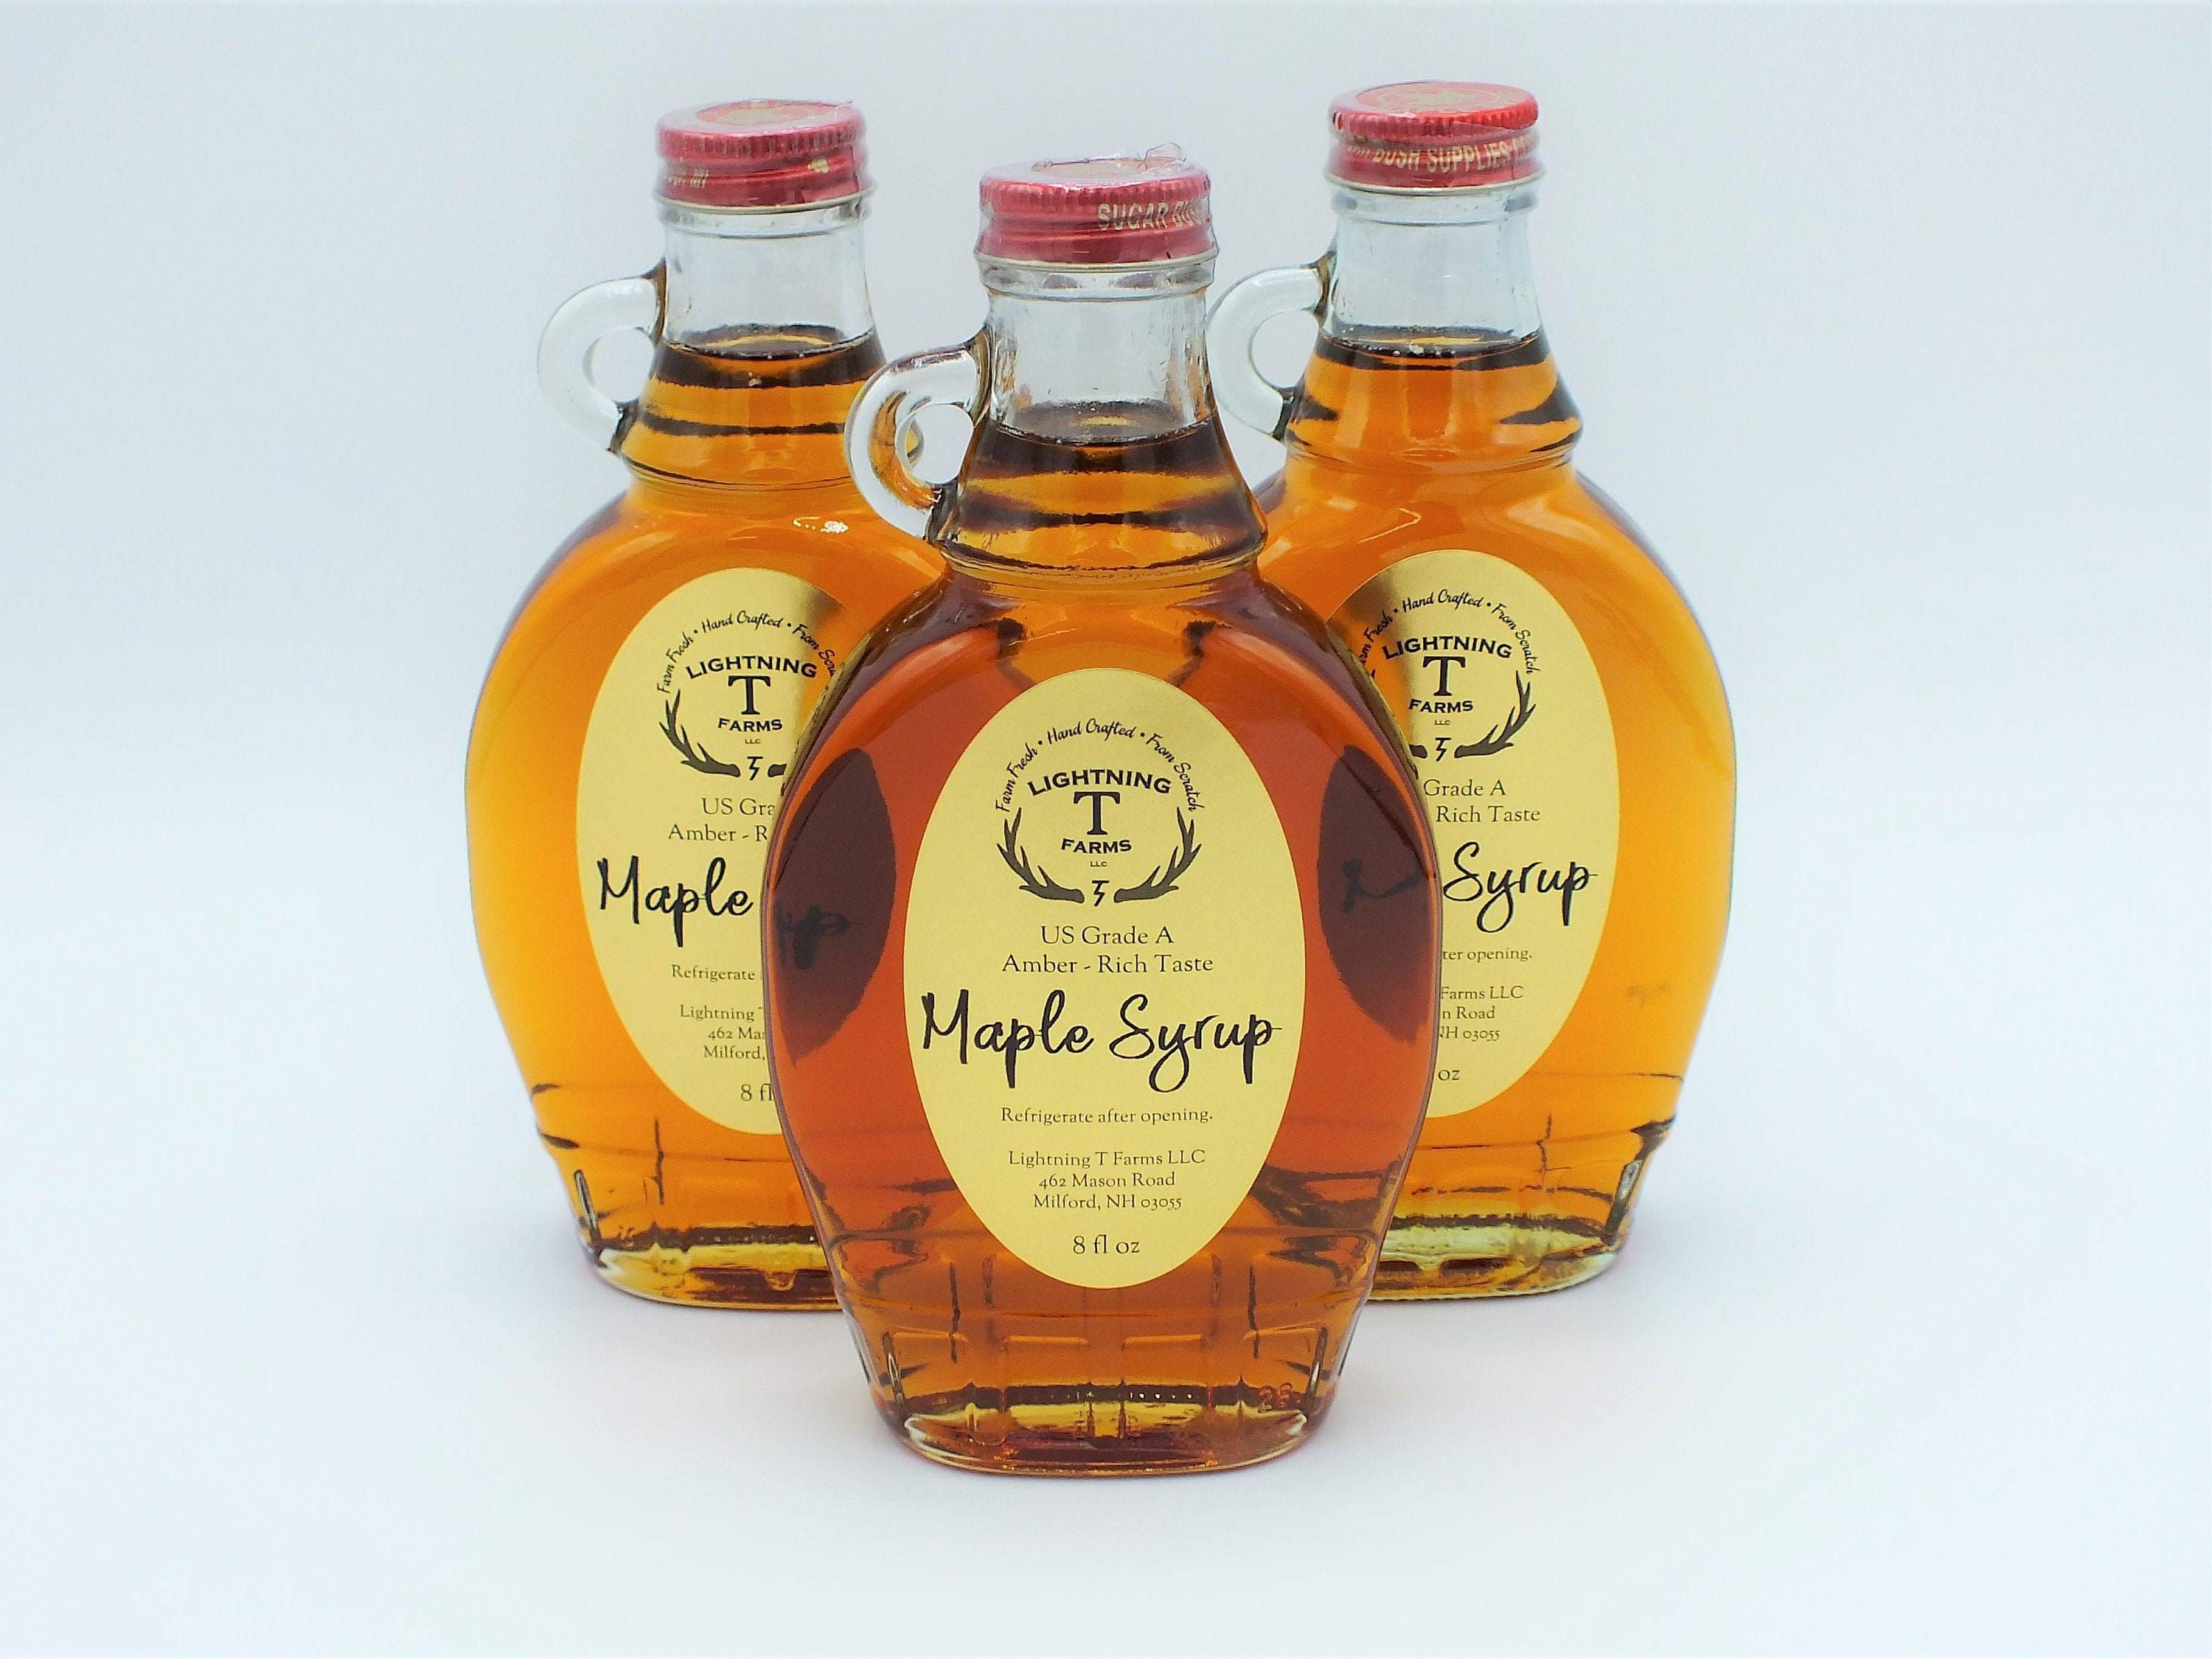 Maple Syrup Tradicional 250ml Stuttgart - Amber Rich Taste - 100